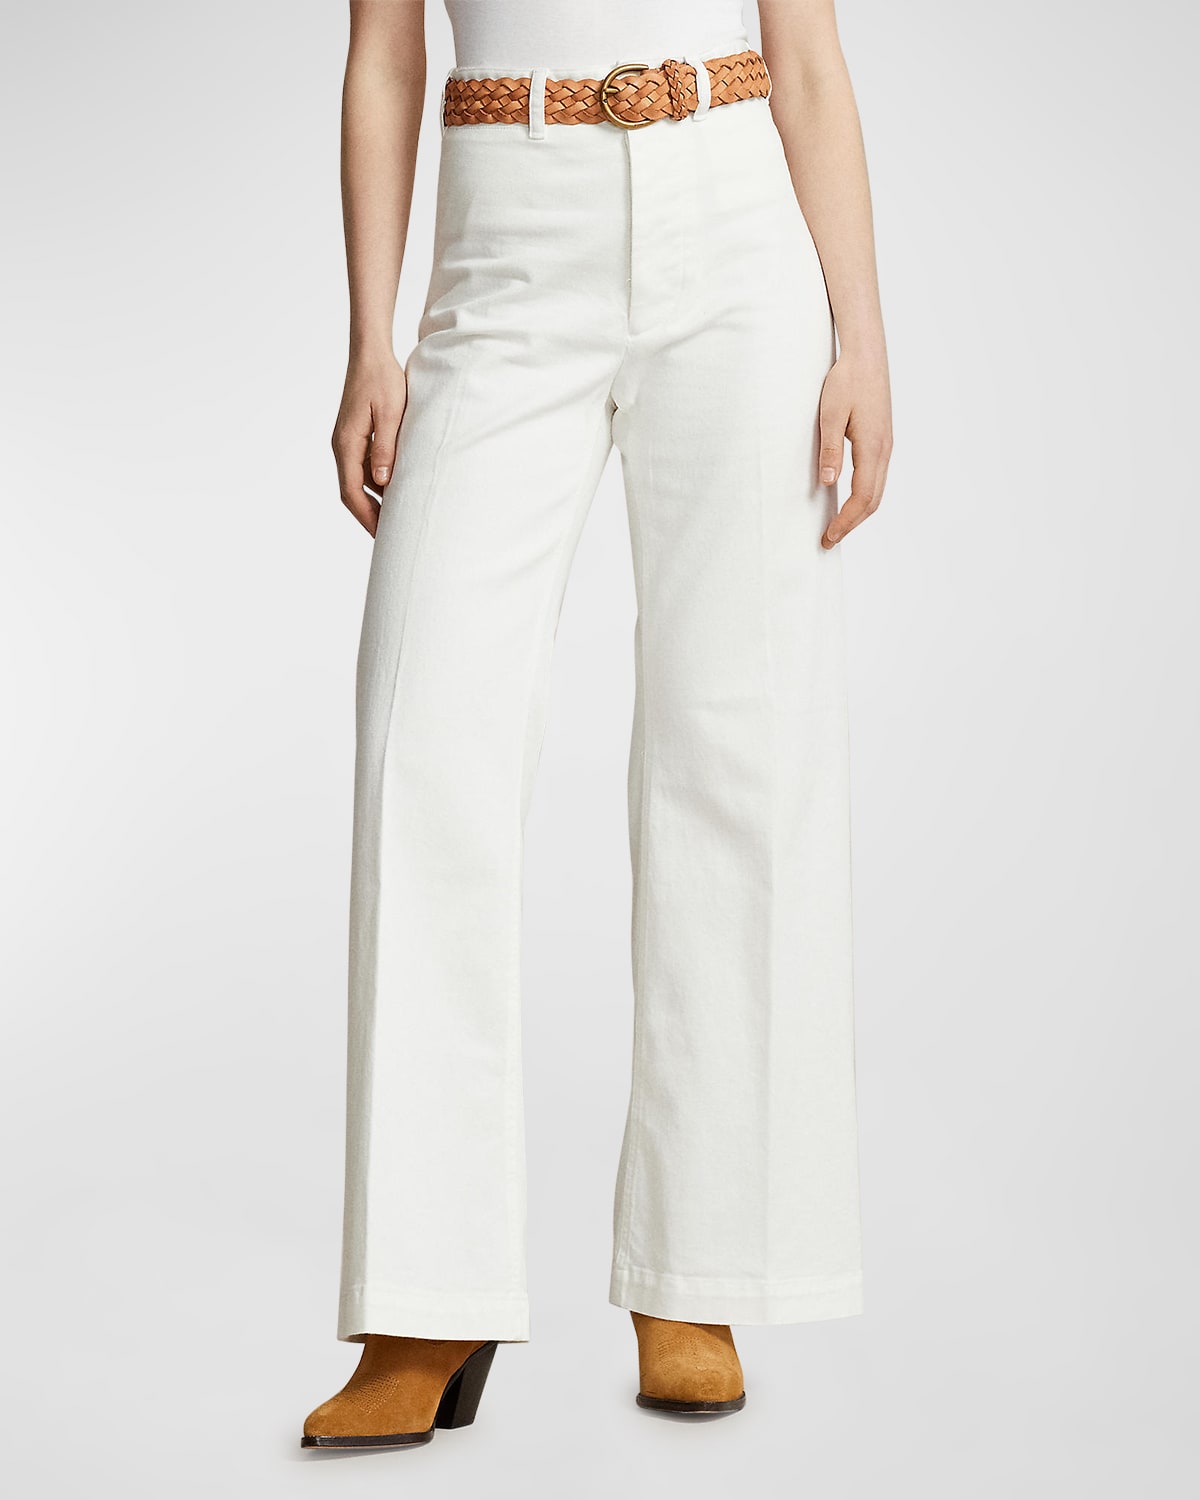 White Stretch Pants | Neiman Marcus